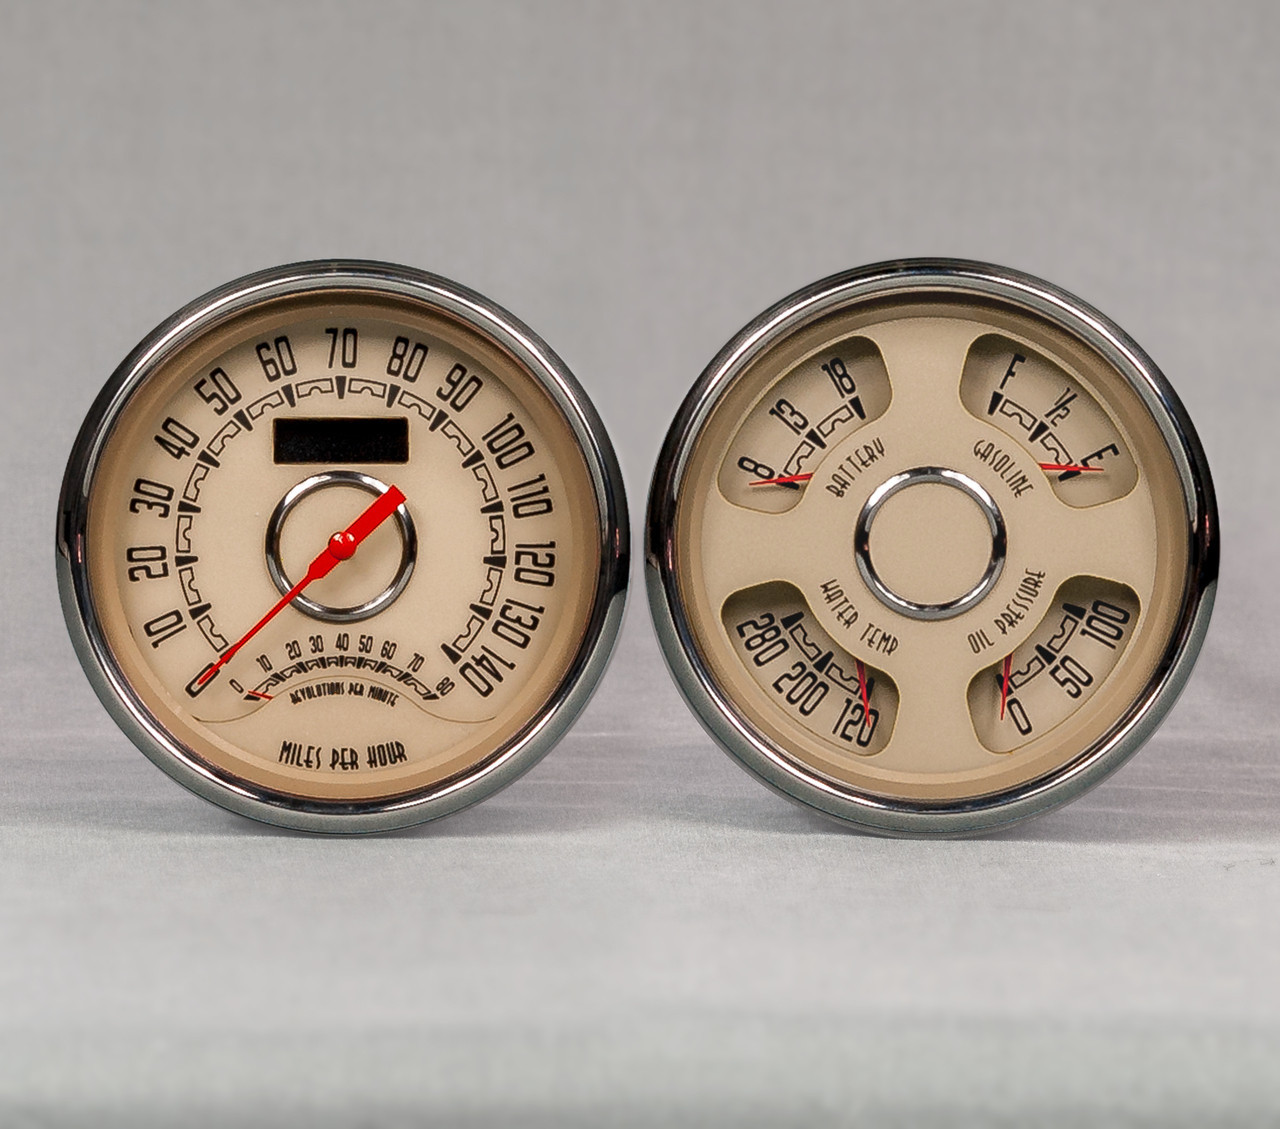 New Vintage 37215-02 Gauge Kit, Woodward, Analog, Fuel Level / Oil Pressure / Speedometer / Tachometer / Voltmeter / Water Temperature, Beige Face, Kit